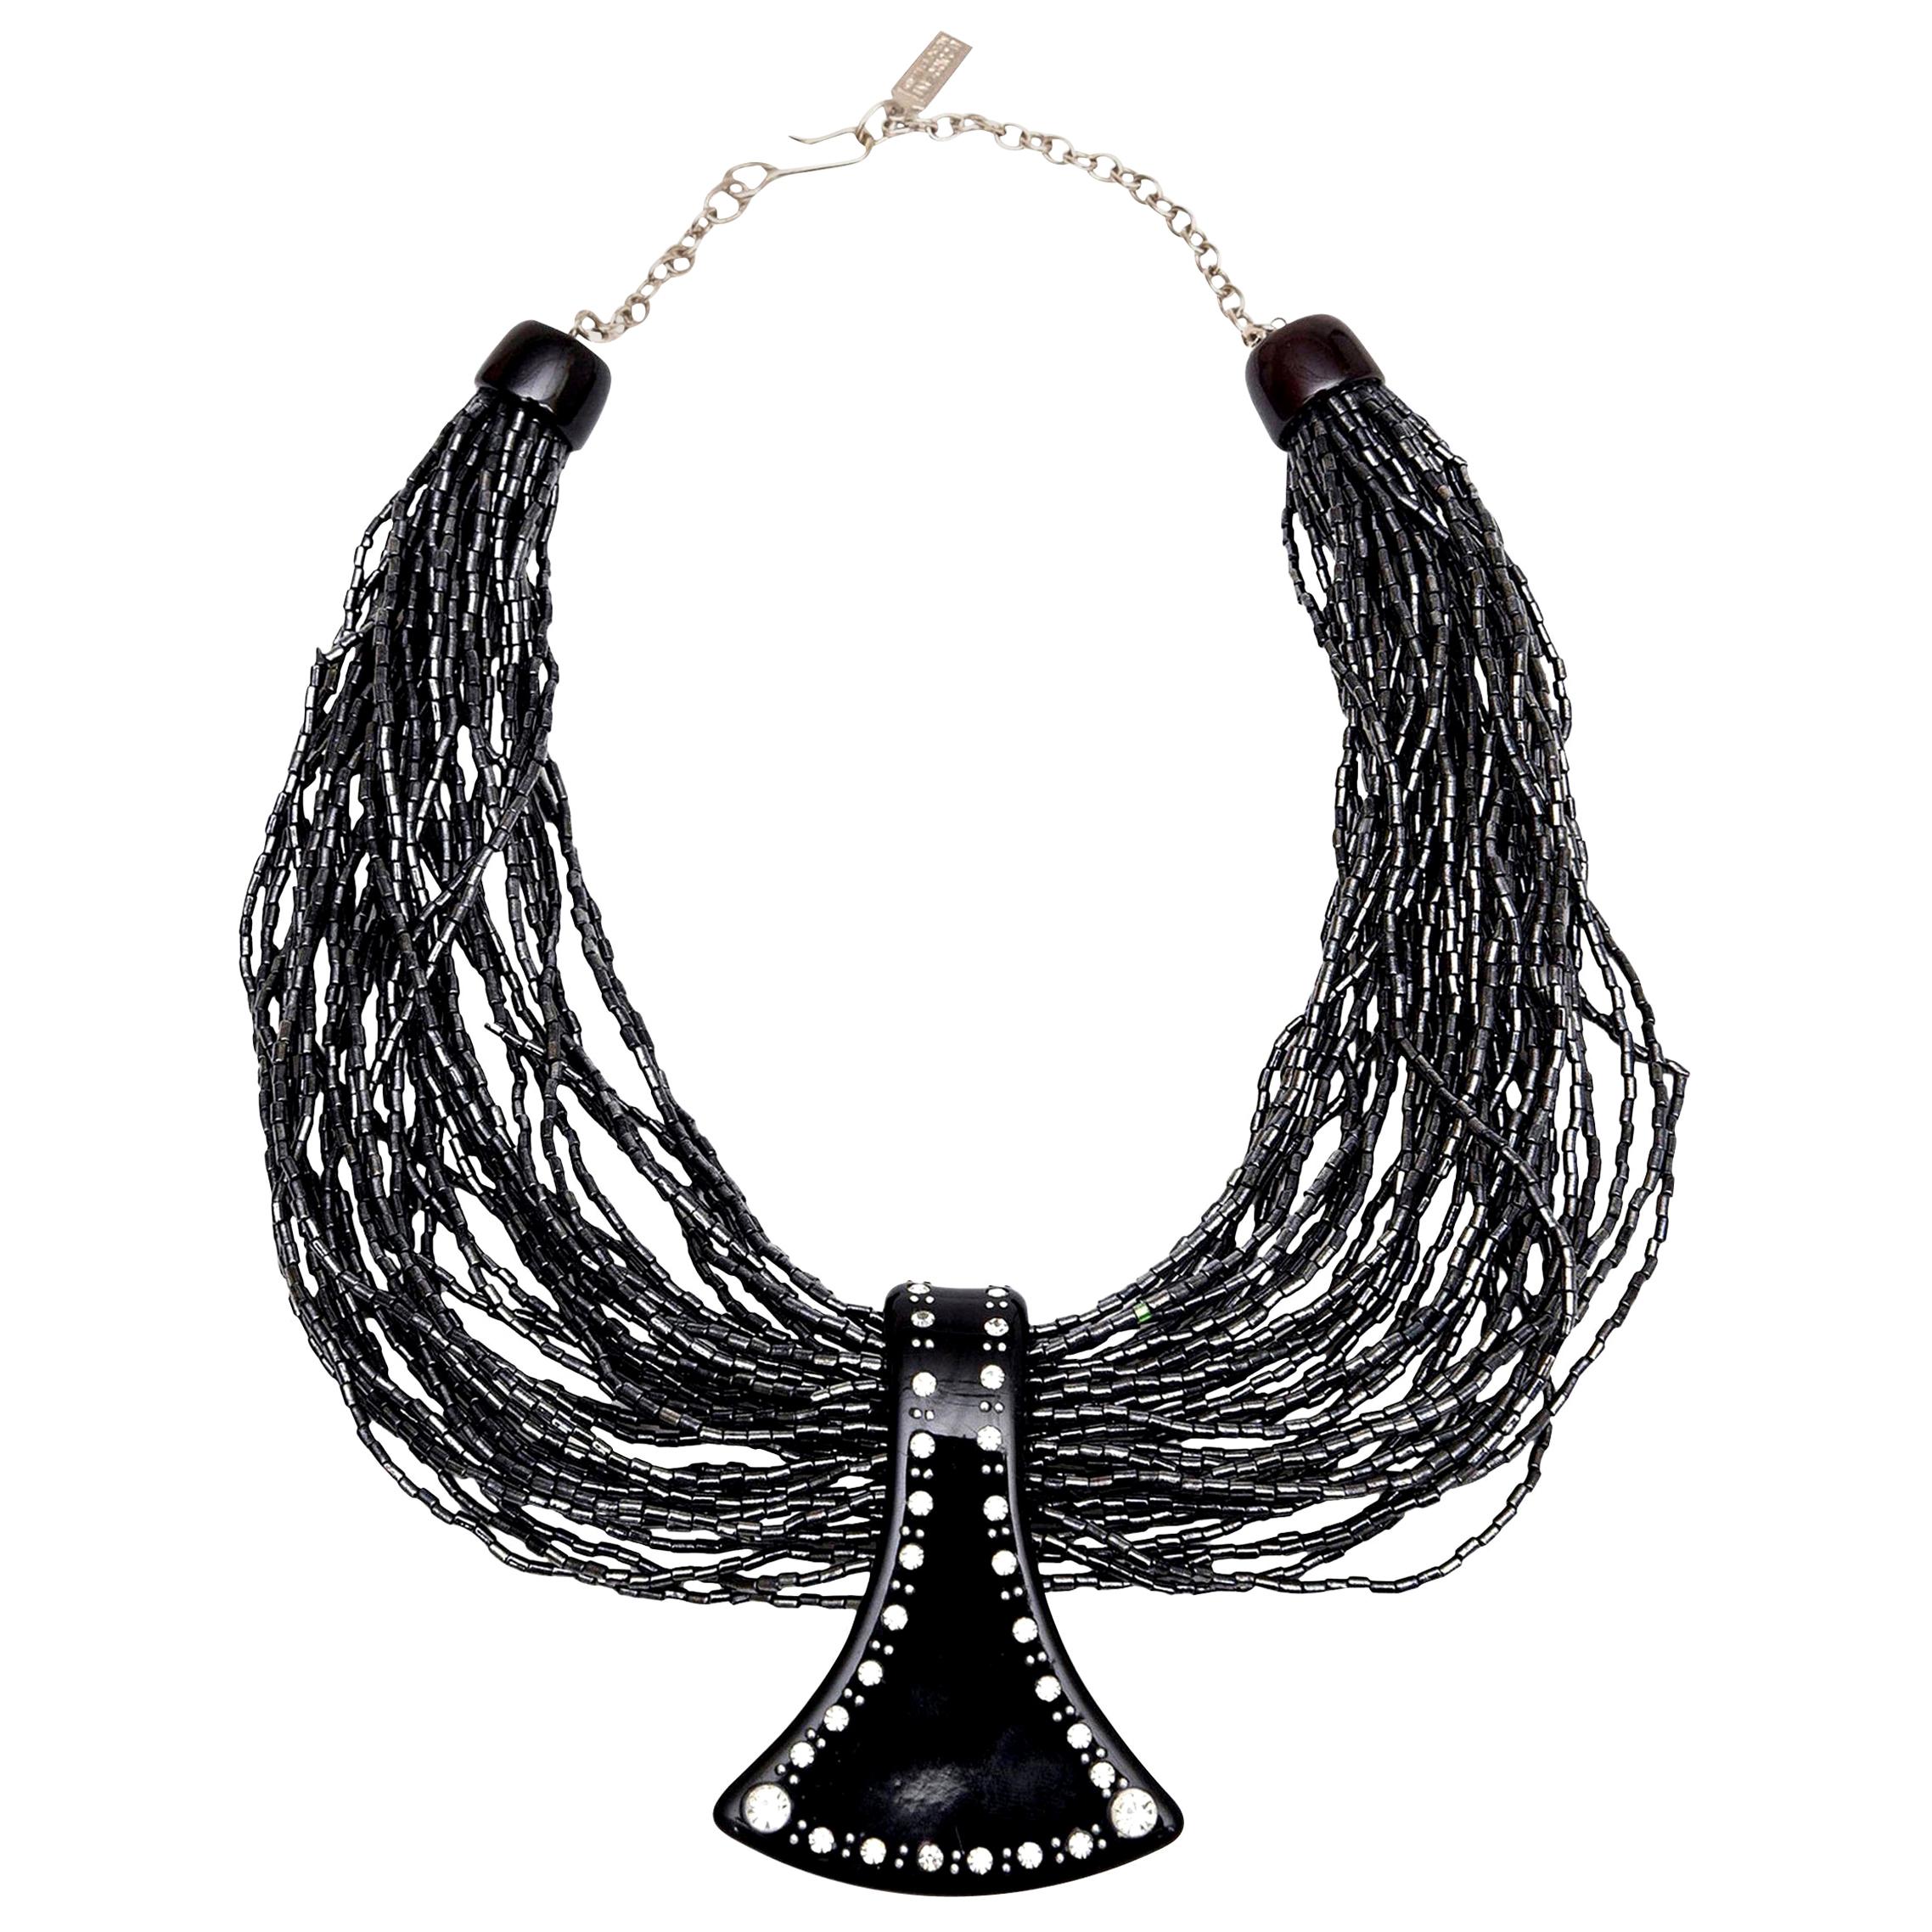  Ugo Correani Glass Beads, Lucite Rhinestone Strand Pendant Necklace Italian For Sale